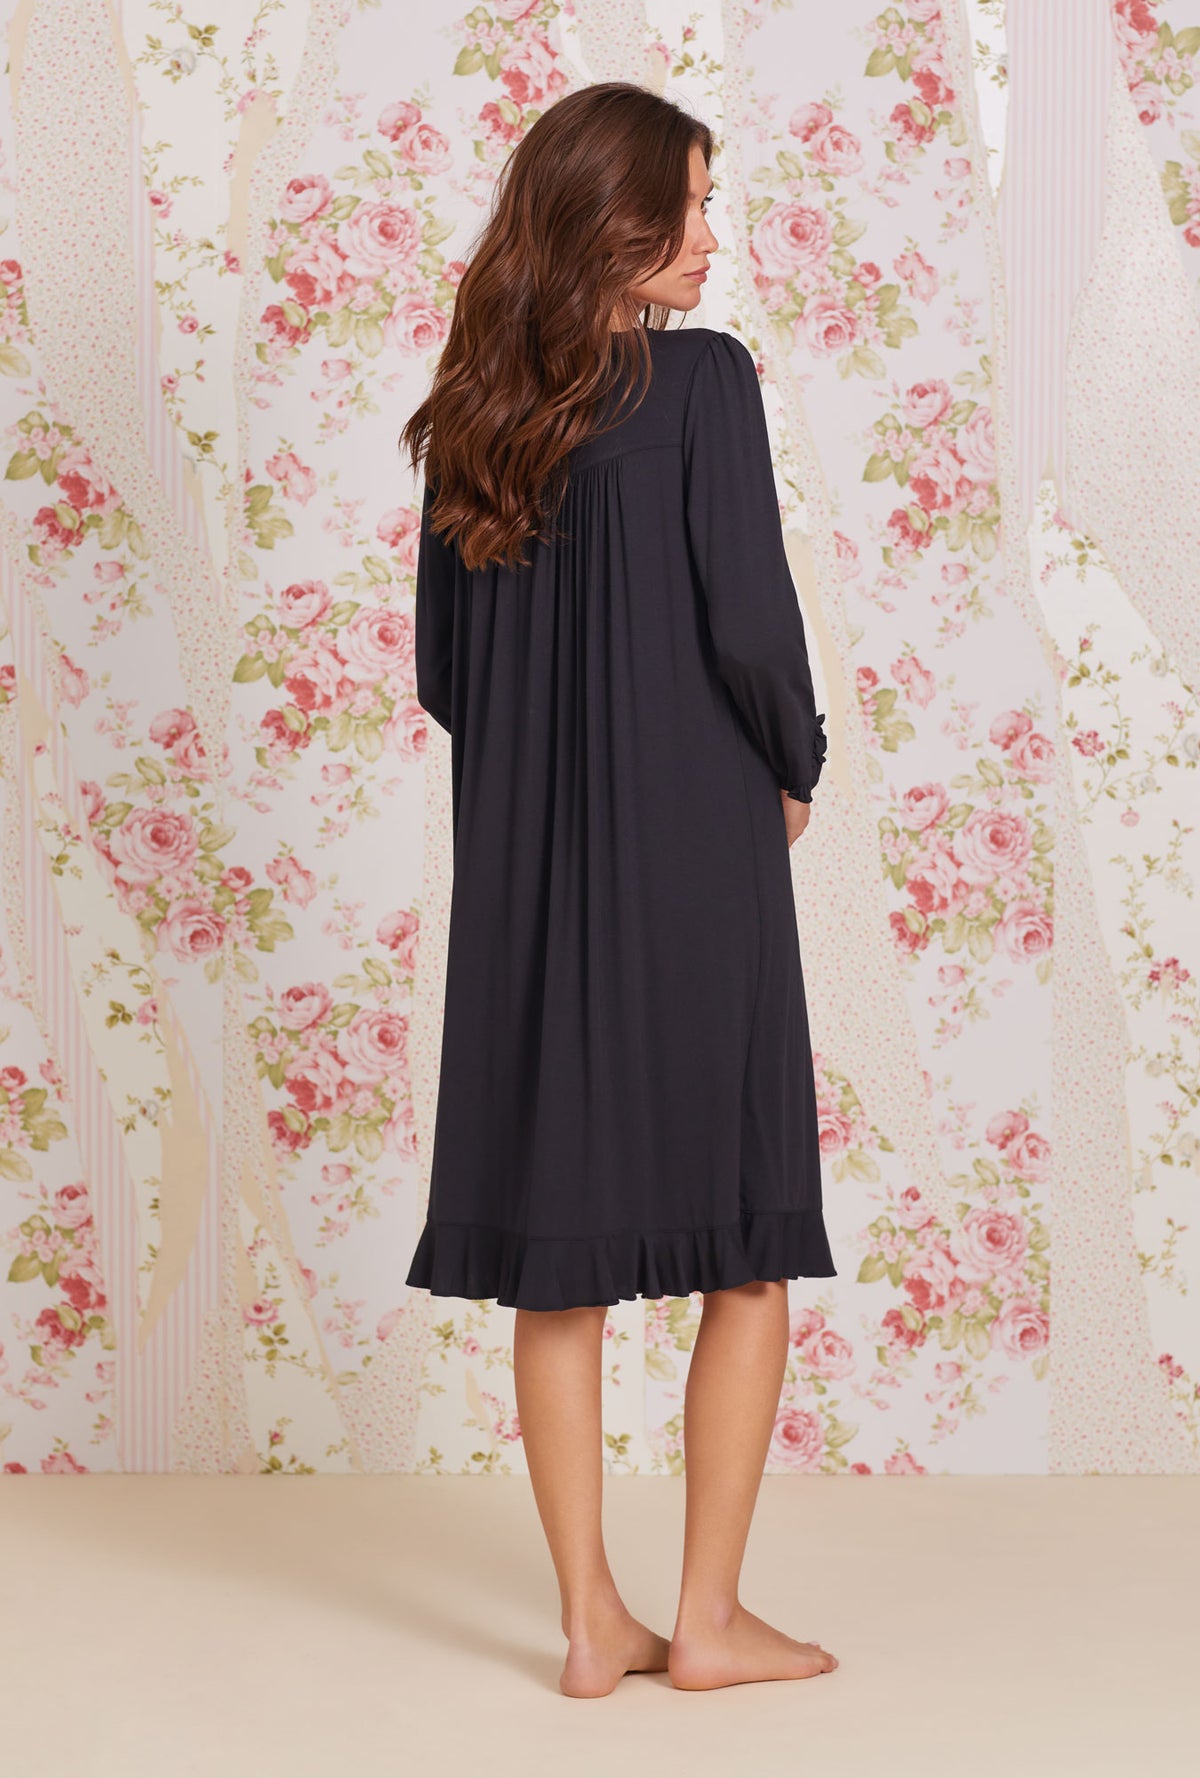 A lady wearing Iconic Black Tencel™ Modal Long Sleeve Waltz Nightgown